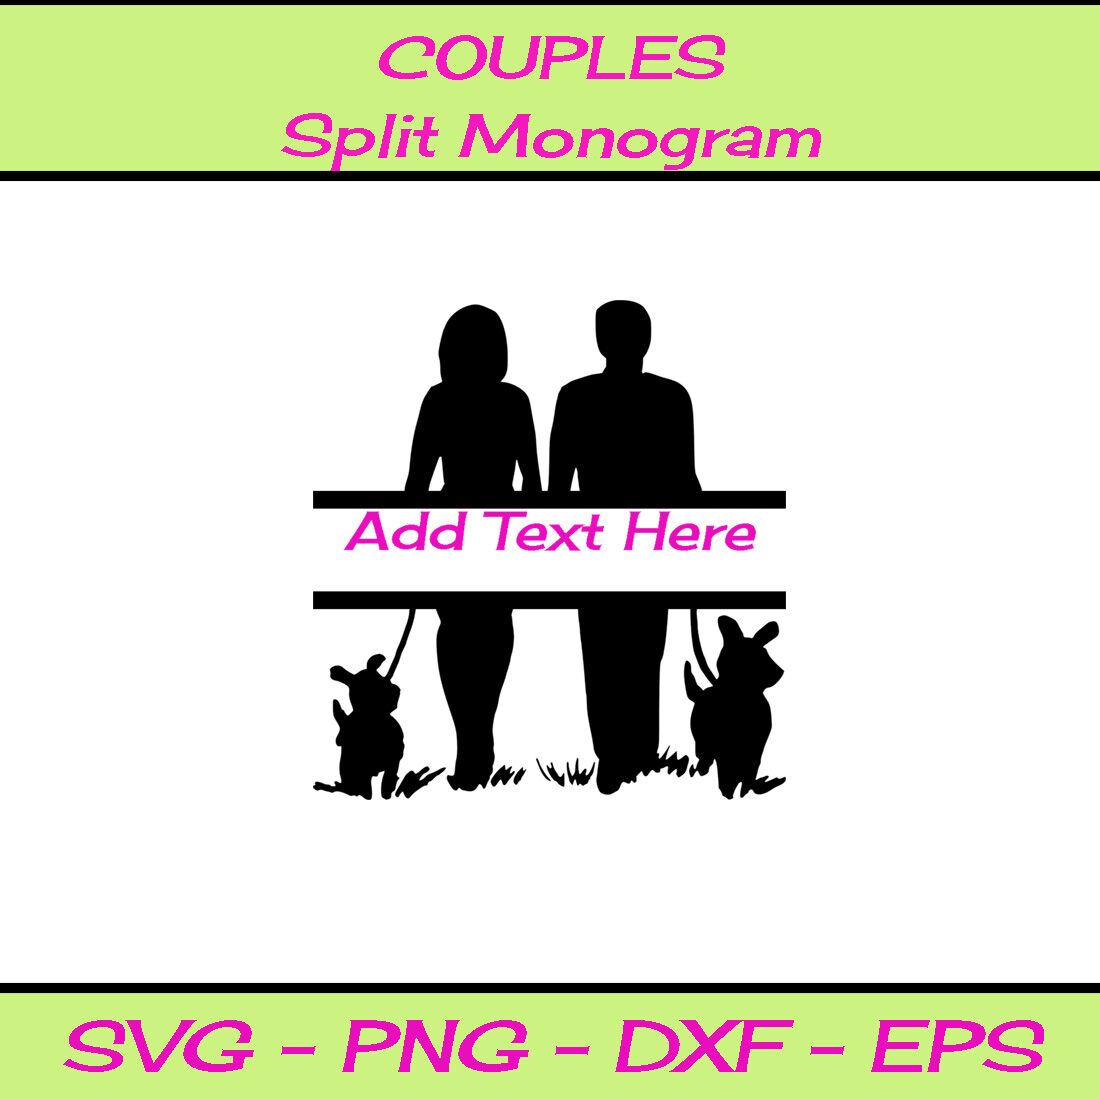 COUPLES SPLIT MONOGRAM SVG By Brilliant Digital Designs | TheHungryJPEG